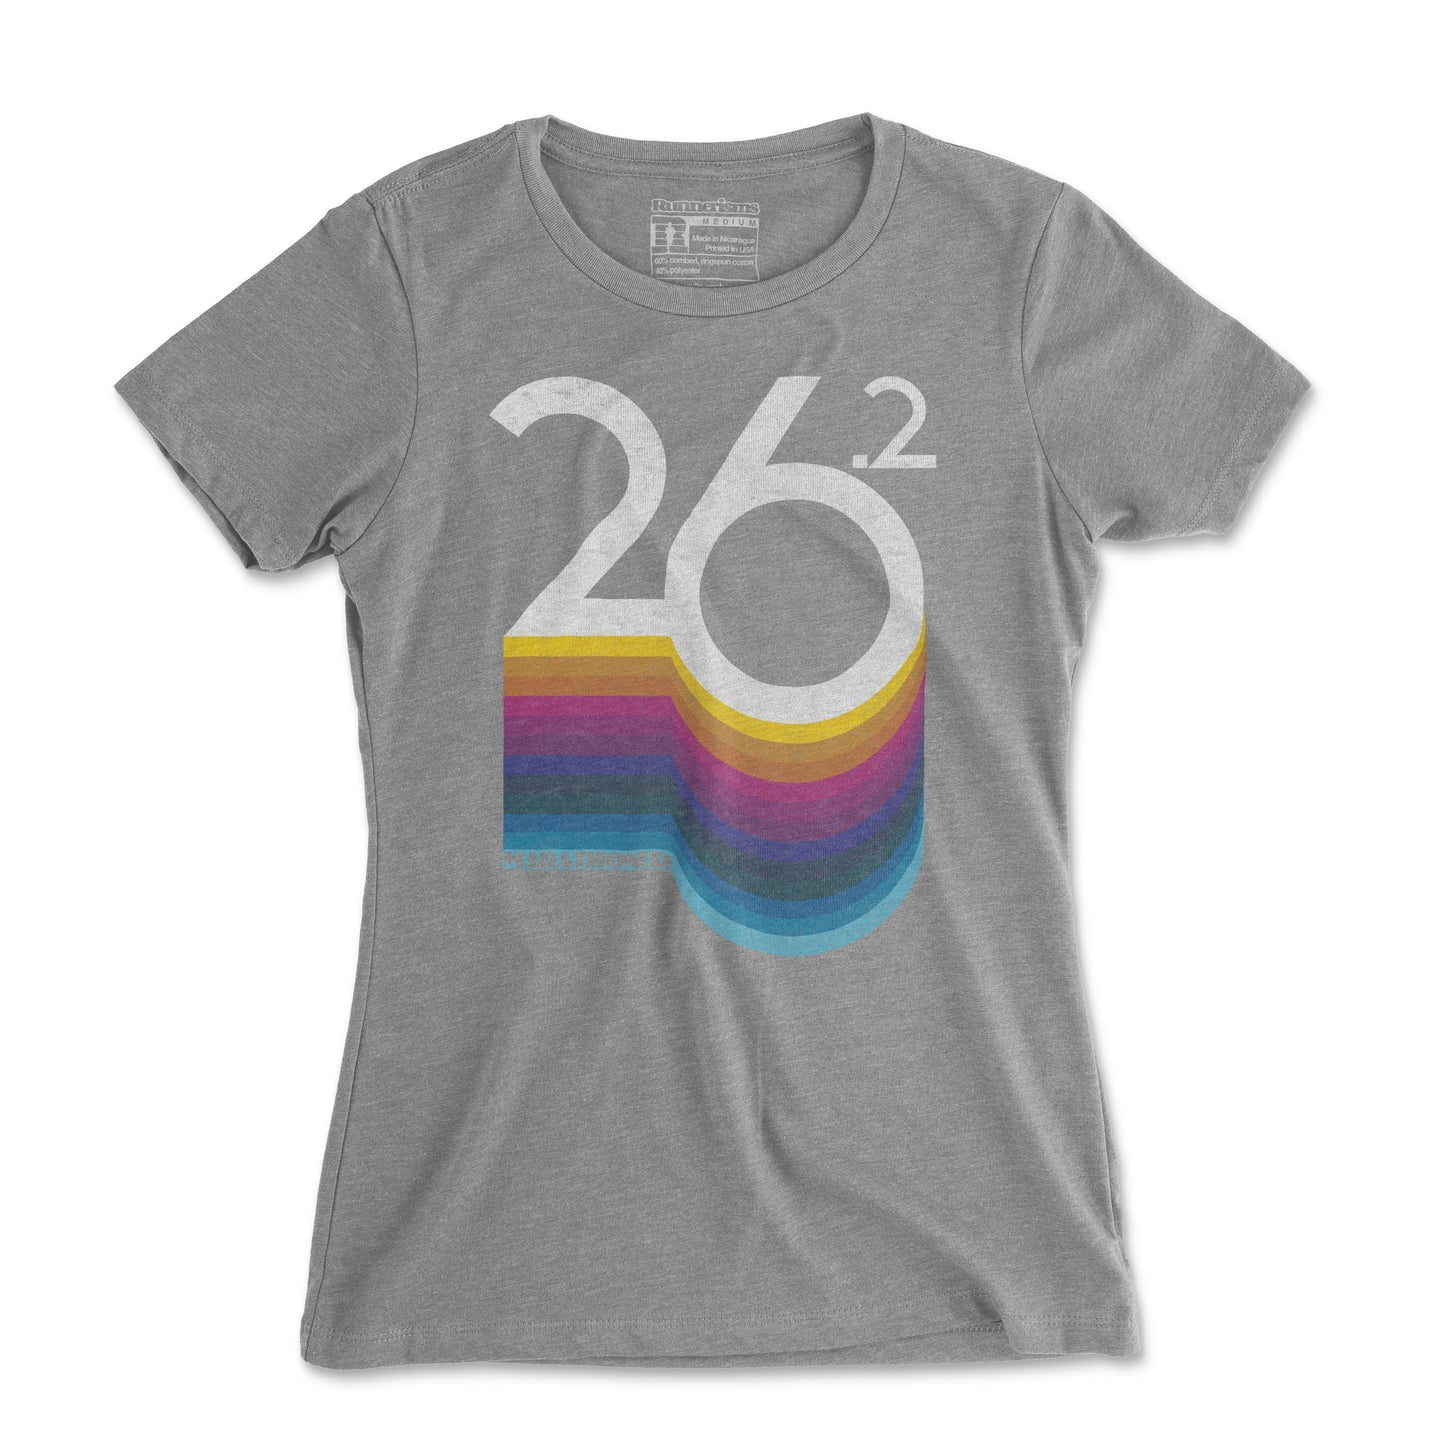 26.2 Retro Marathoner - Women's T Shirt